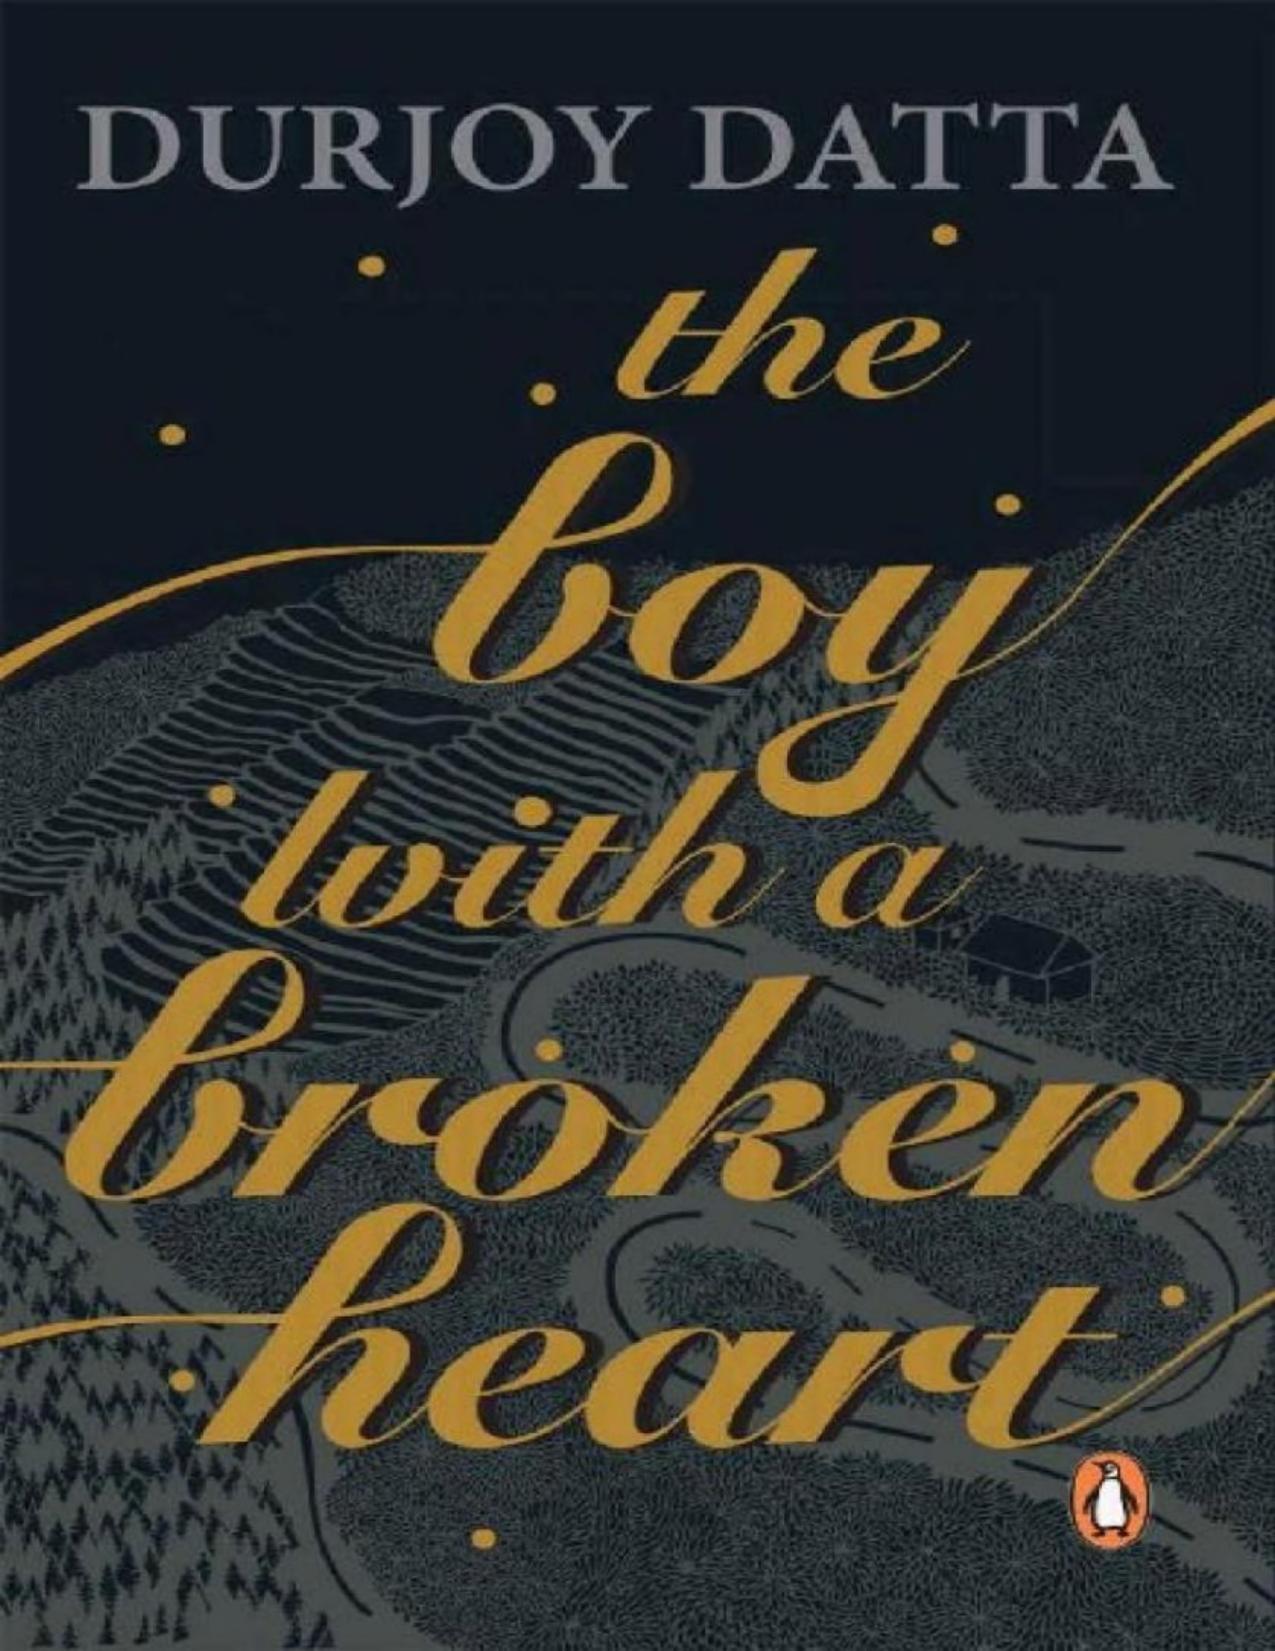 a boy with broken heart pdf download